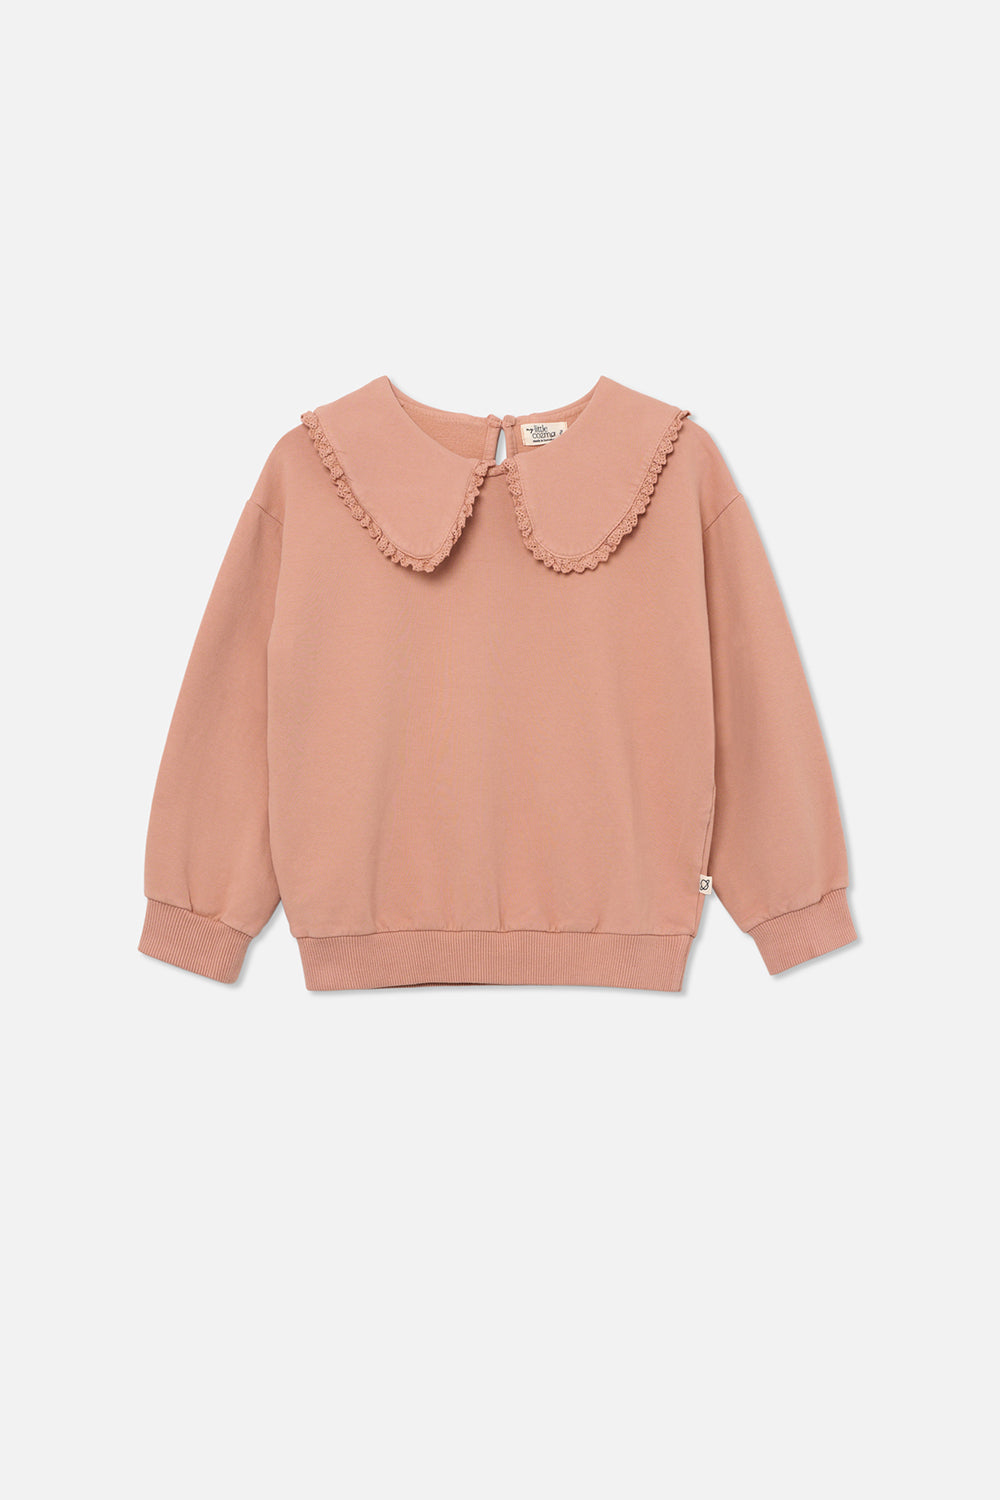 Comfort Colors Rectangle Established Sorority Sweatshirt – Made by